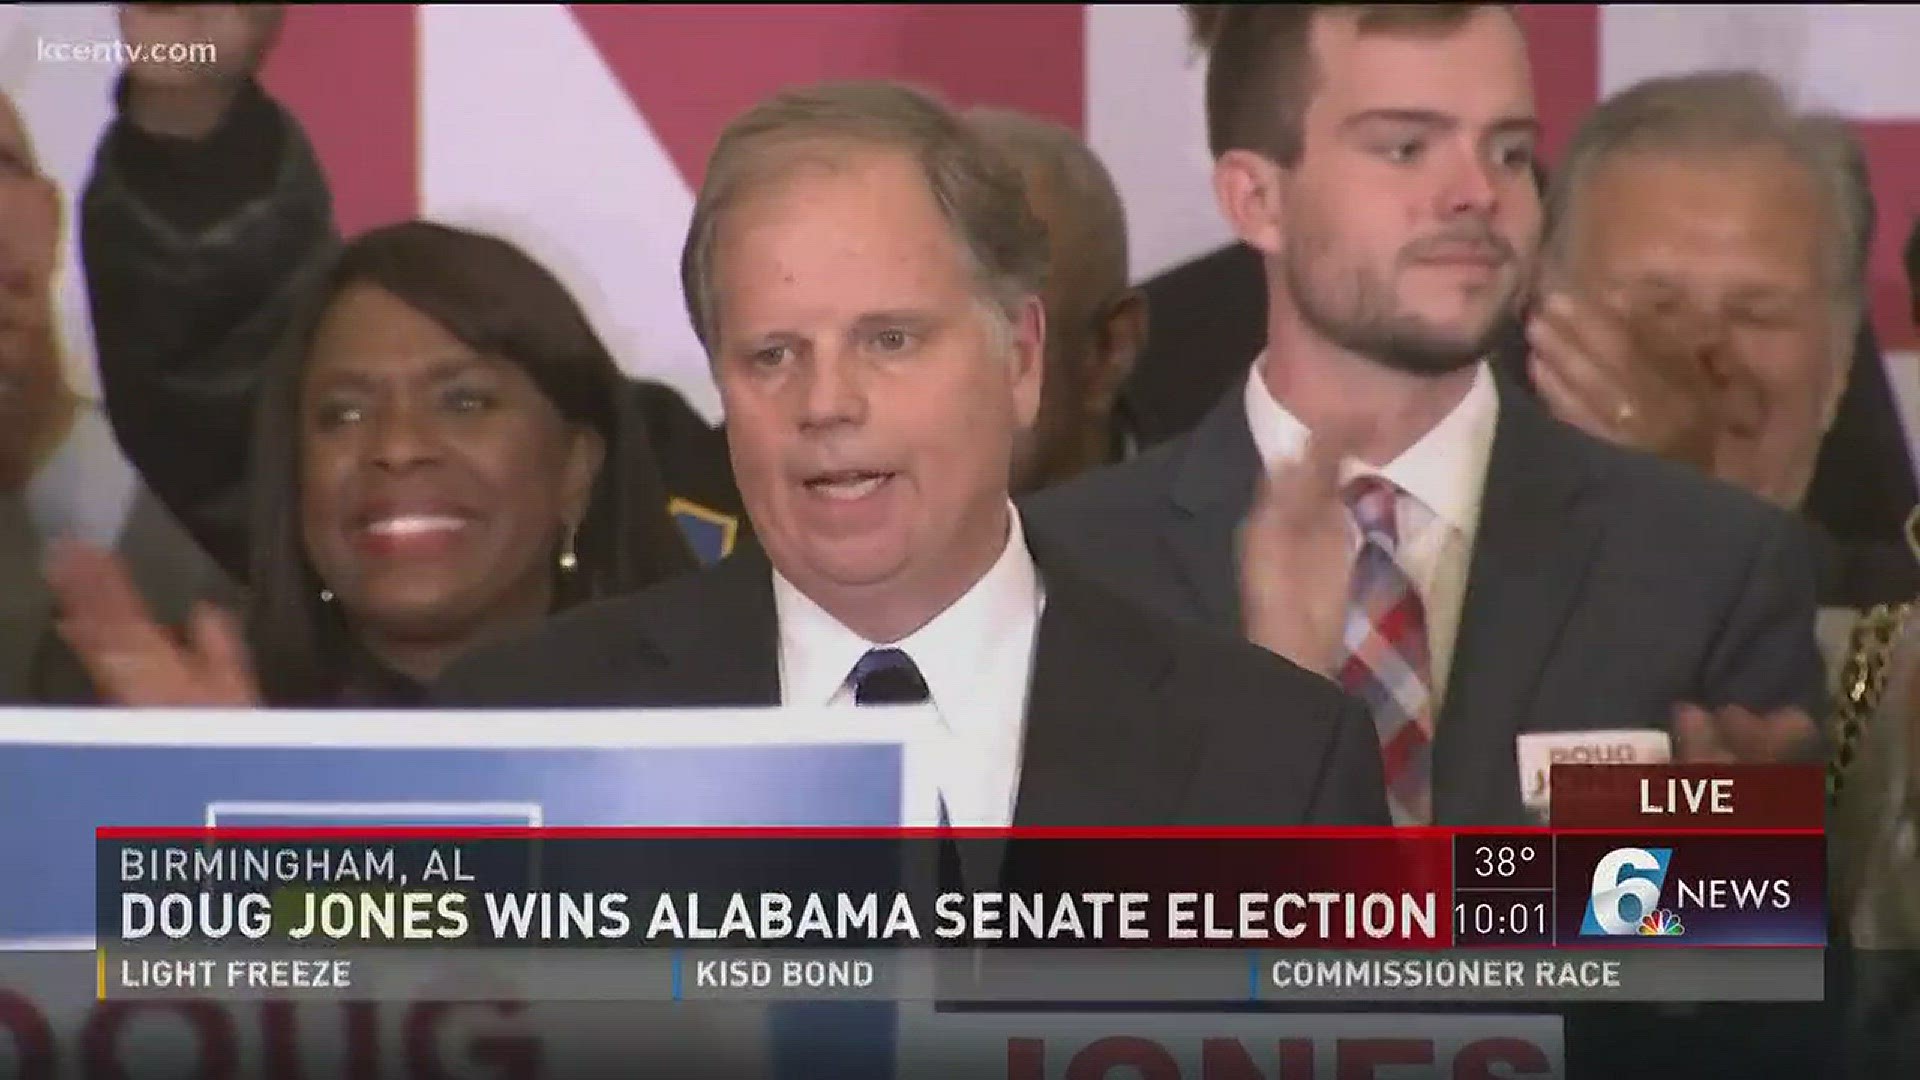 Doug Jones wins Alabama Senate Election over Republican Roy Moore.